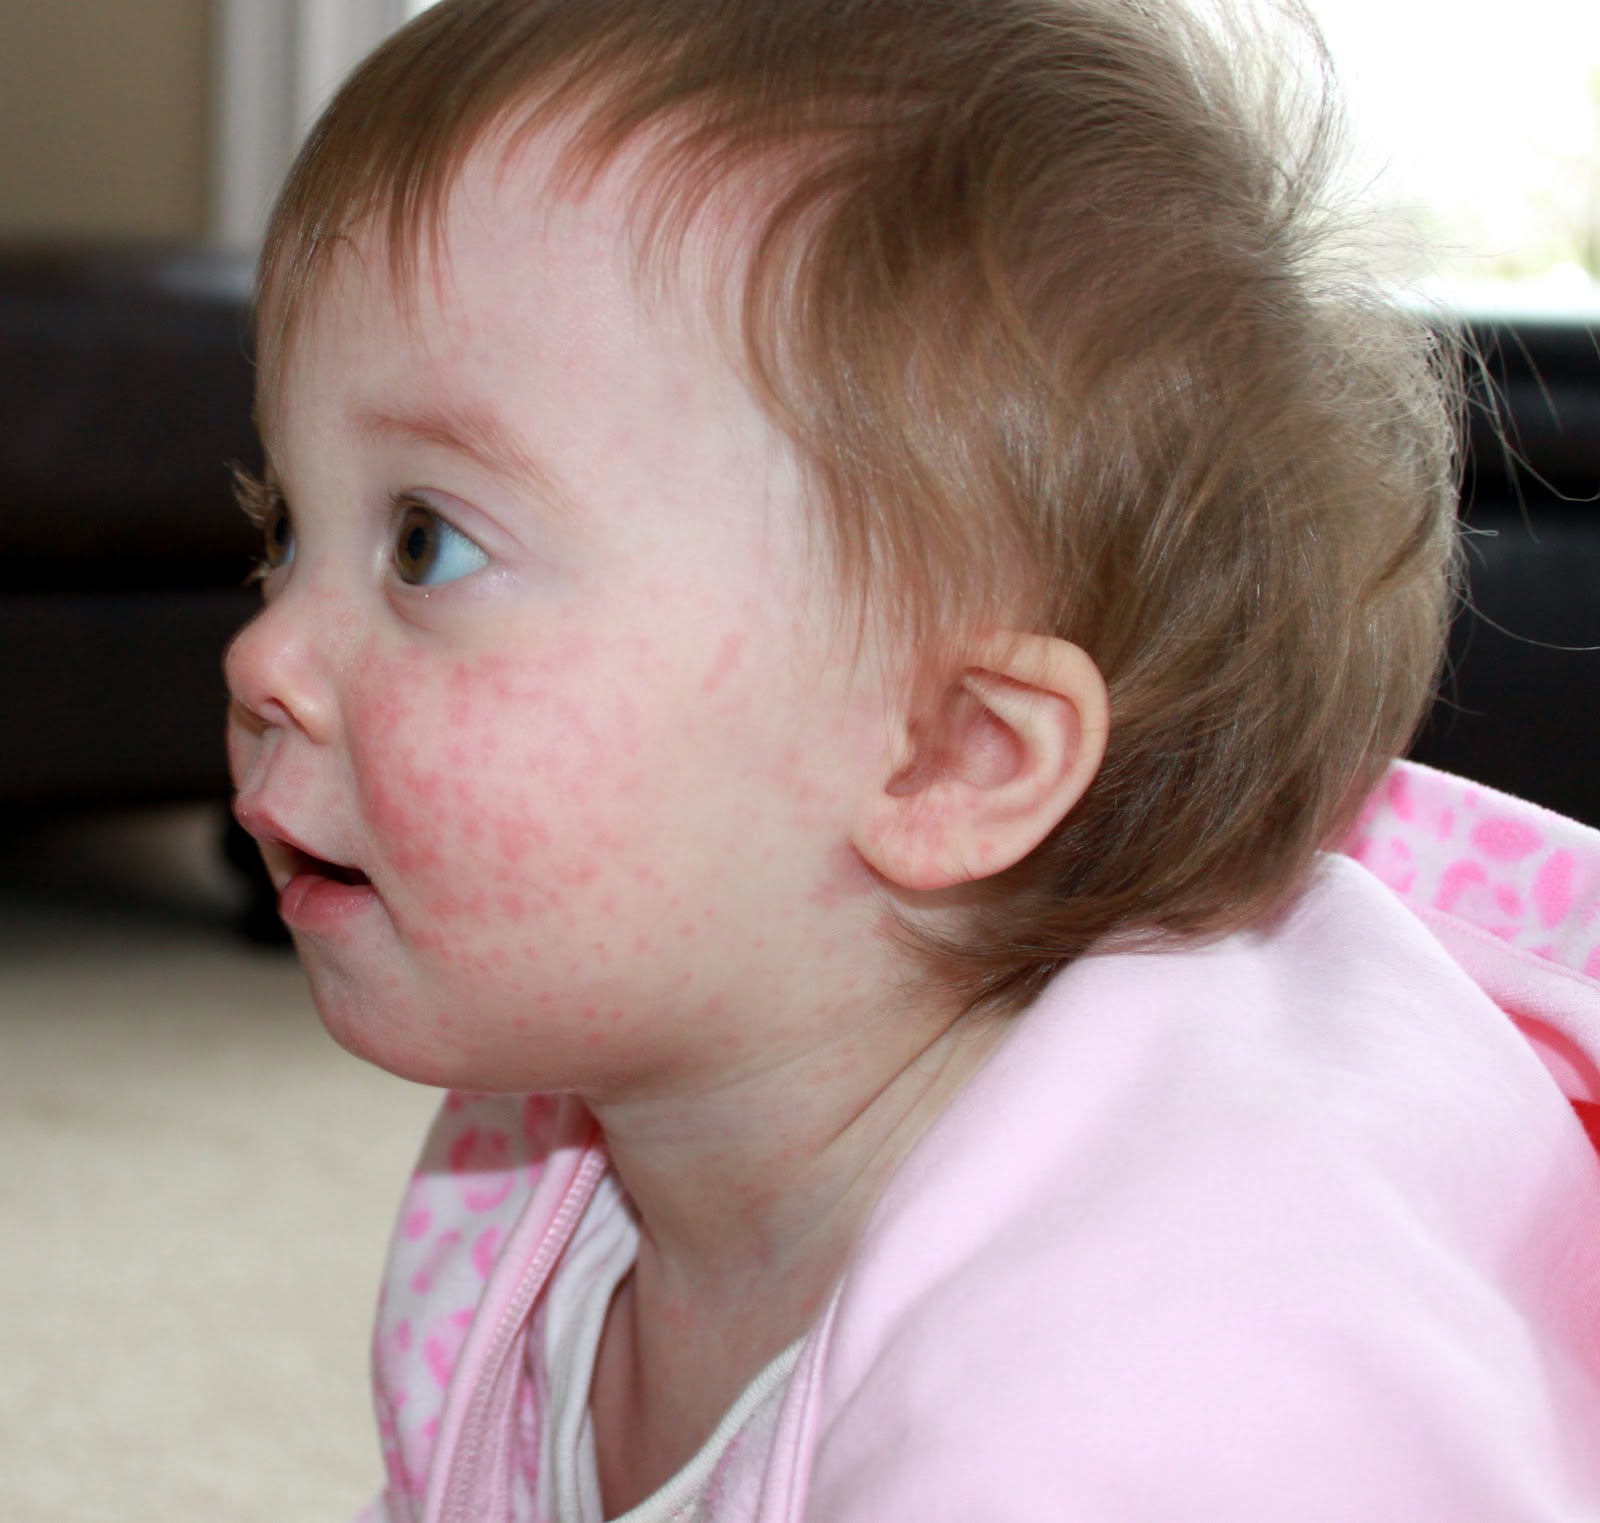 Аллергия у ребенка на апельсин фото